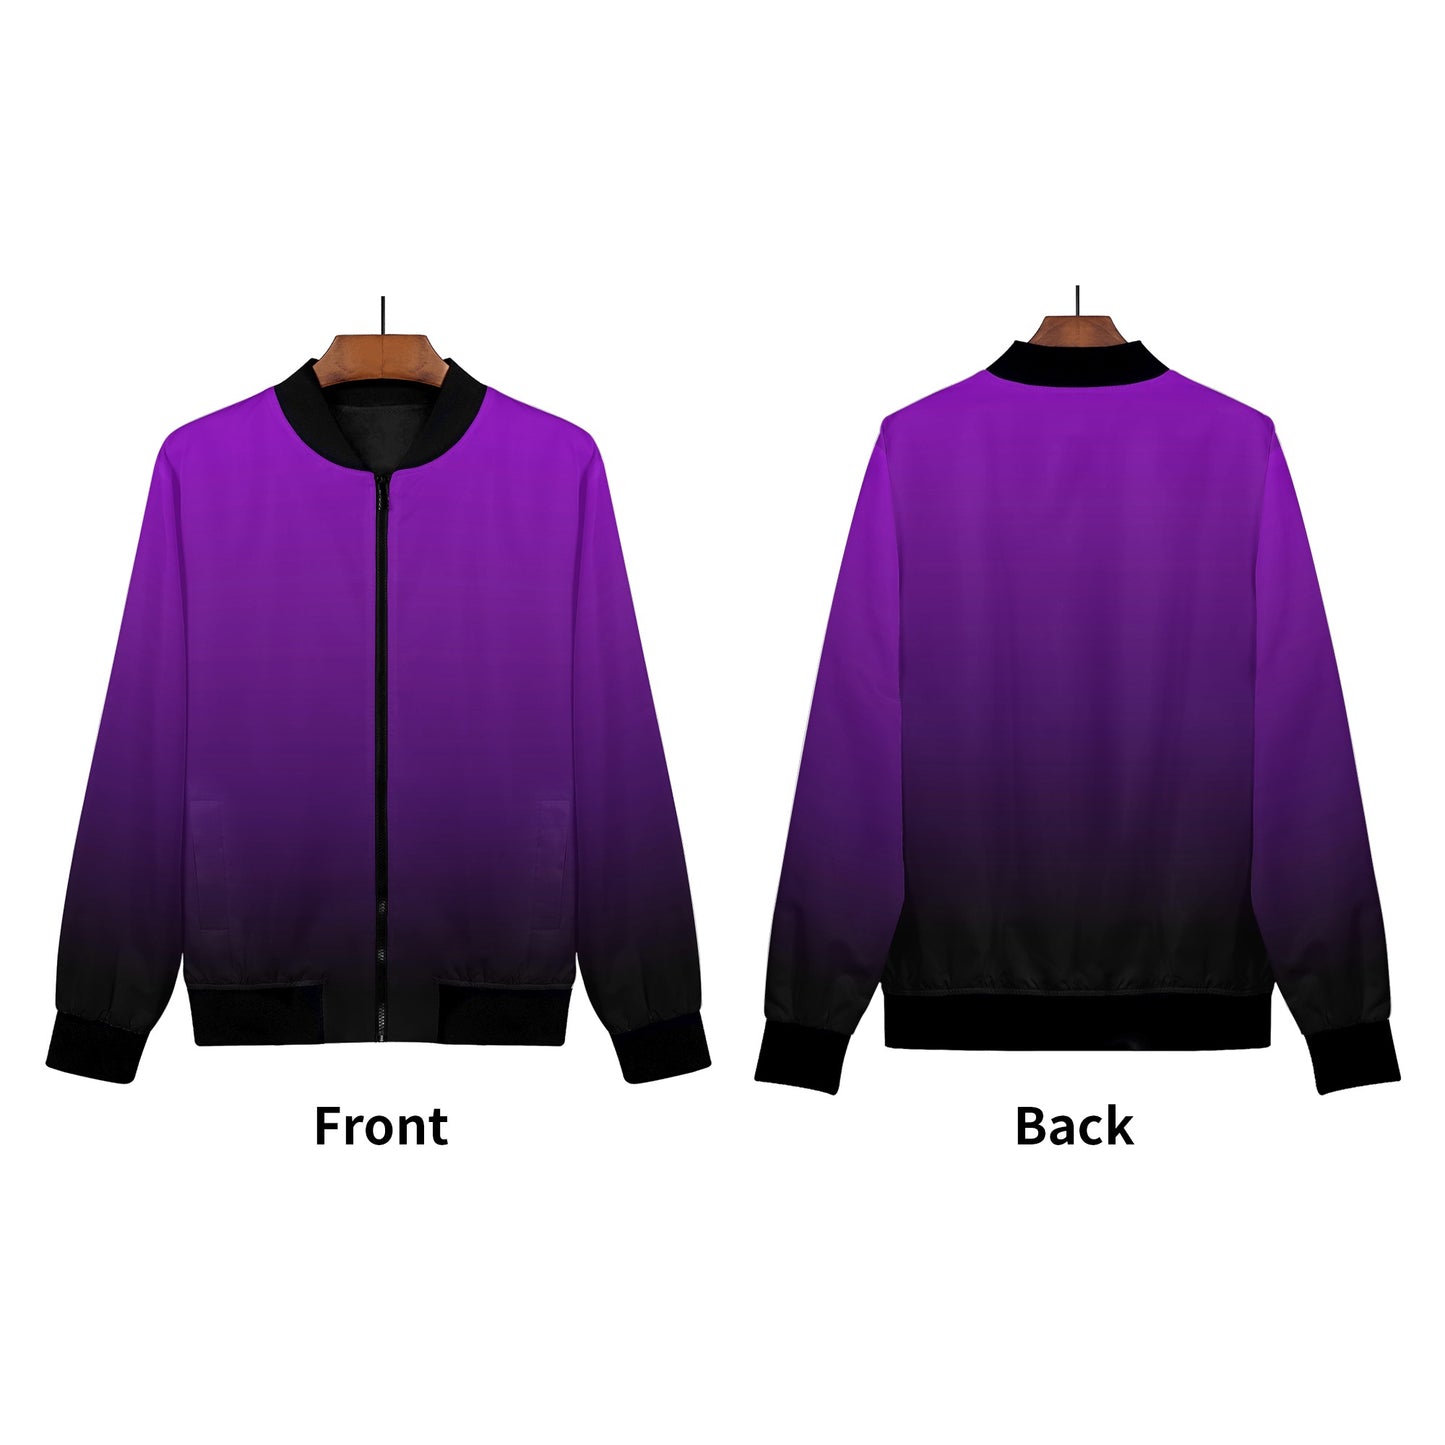 Purple Ombre Women Bomber Jacket, Black Tie Dye Gradient Zip Up Streetwear Winter Vintage Varsity Warm Designer Coat Outfit Plus Size Ladies